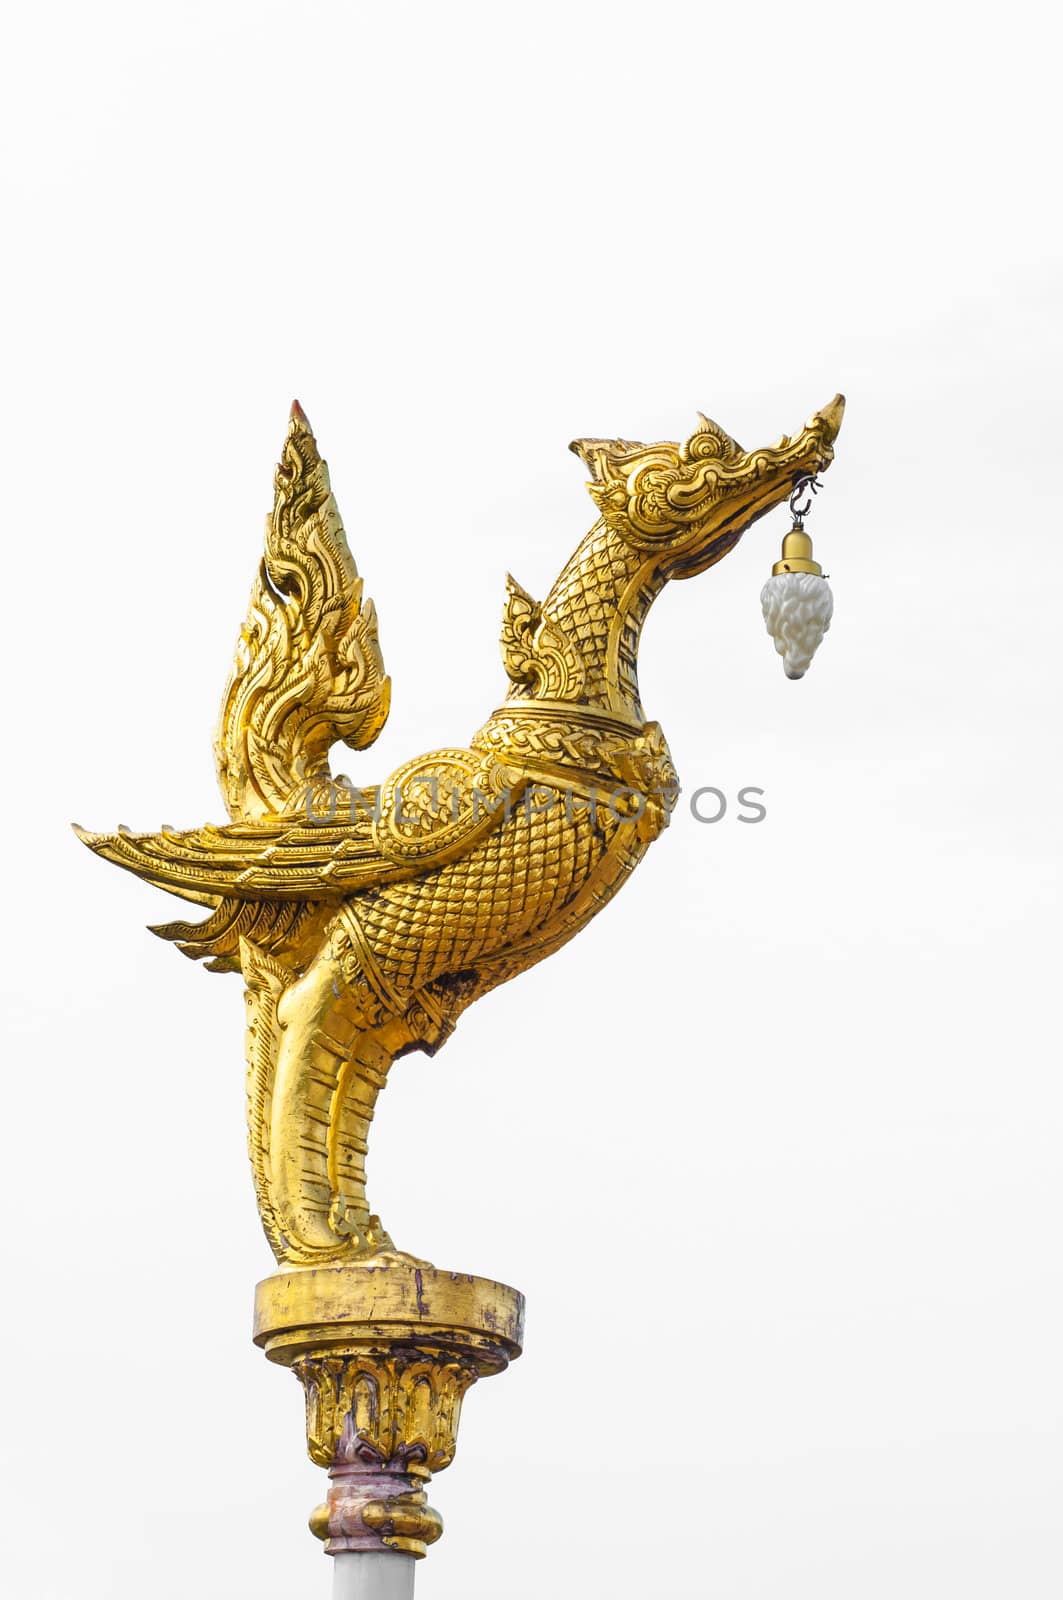 Golden statue of creature